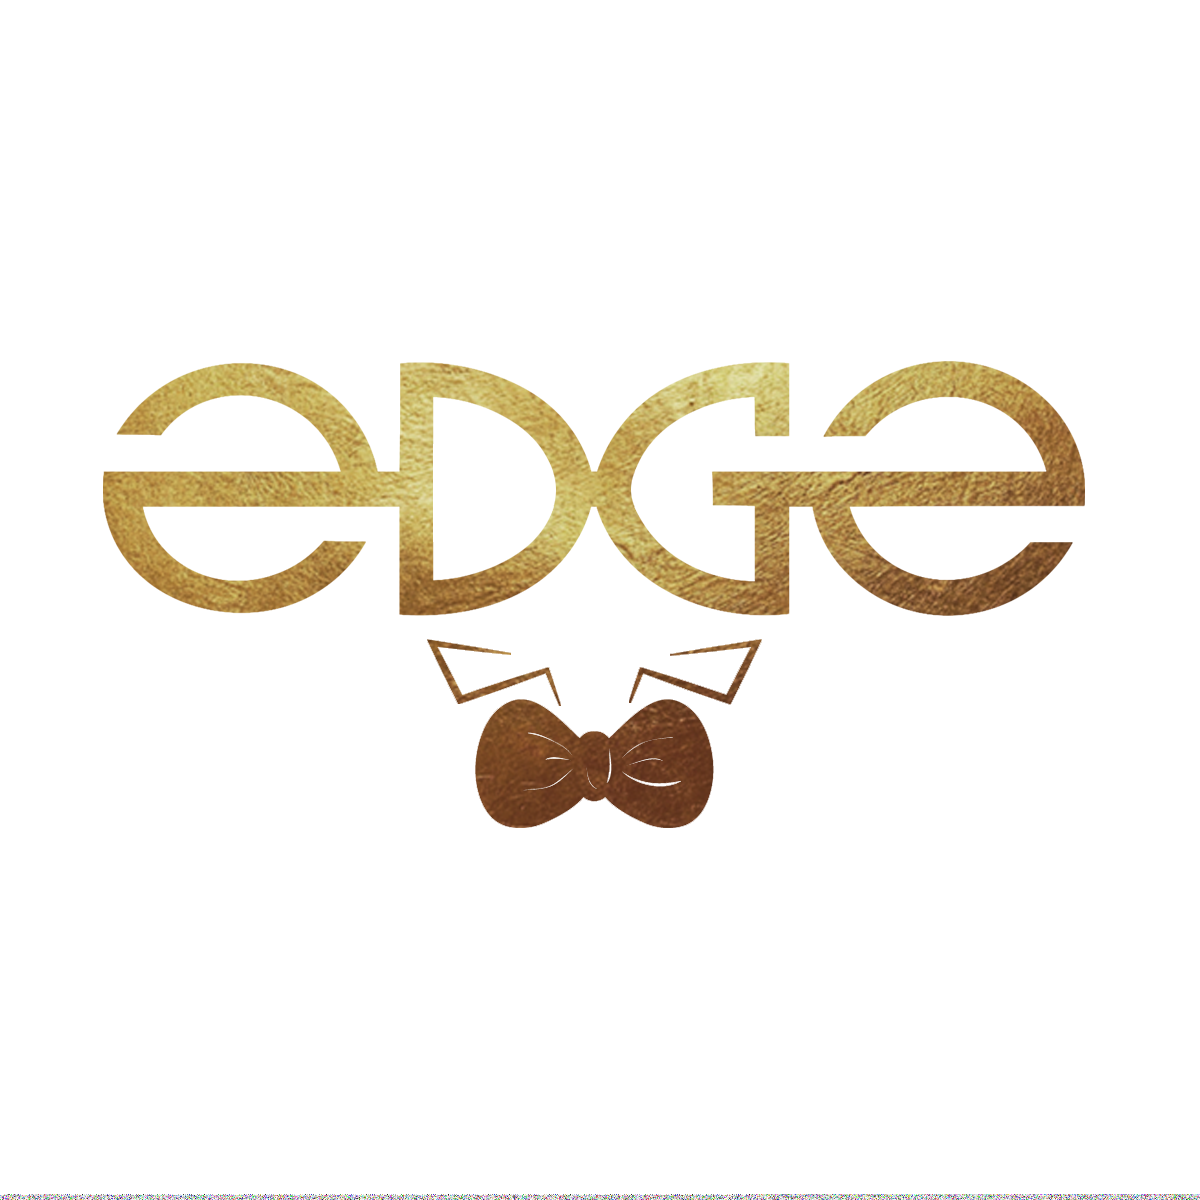 dj edge